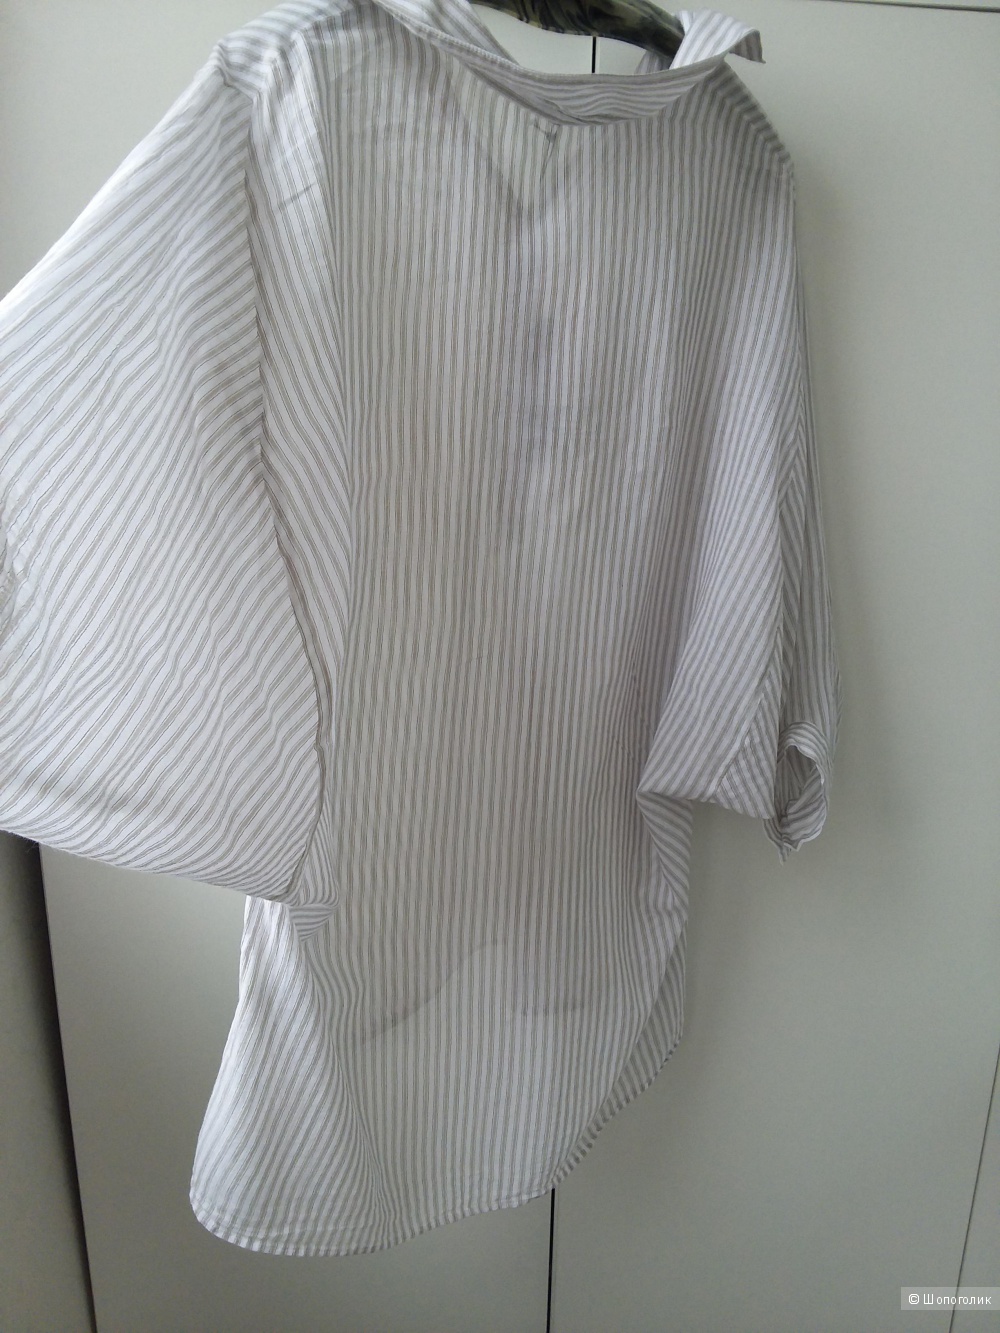 Женская рубашка Pinko Skin c поясом на 46 размер